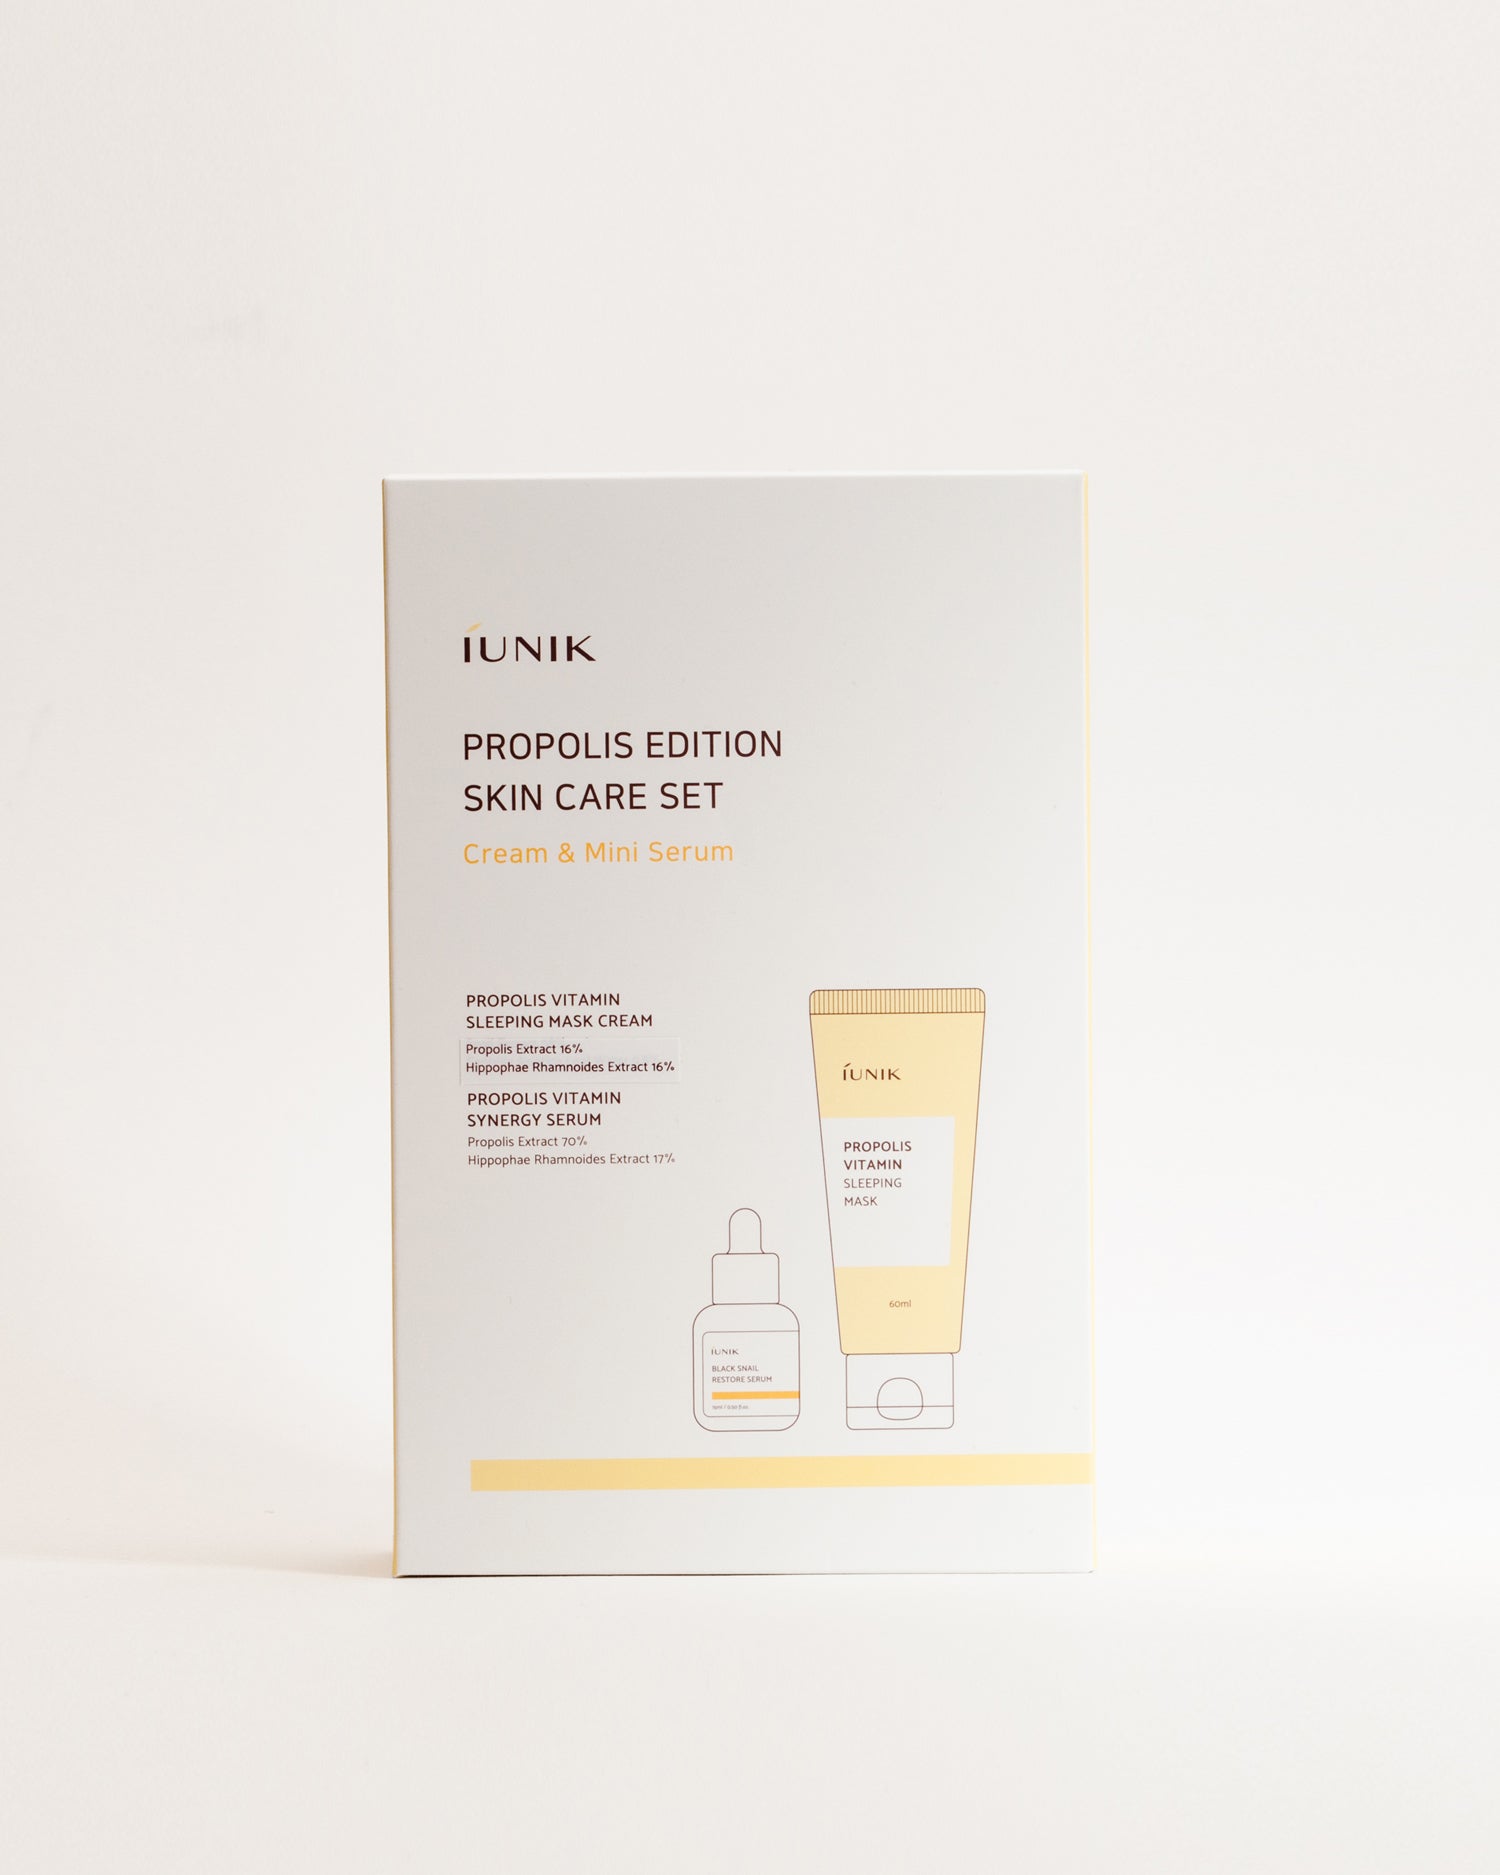 IUNIK Propolis Edition Skincare Set